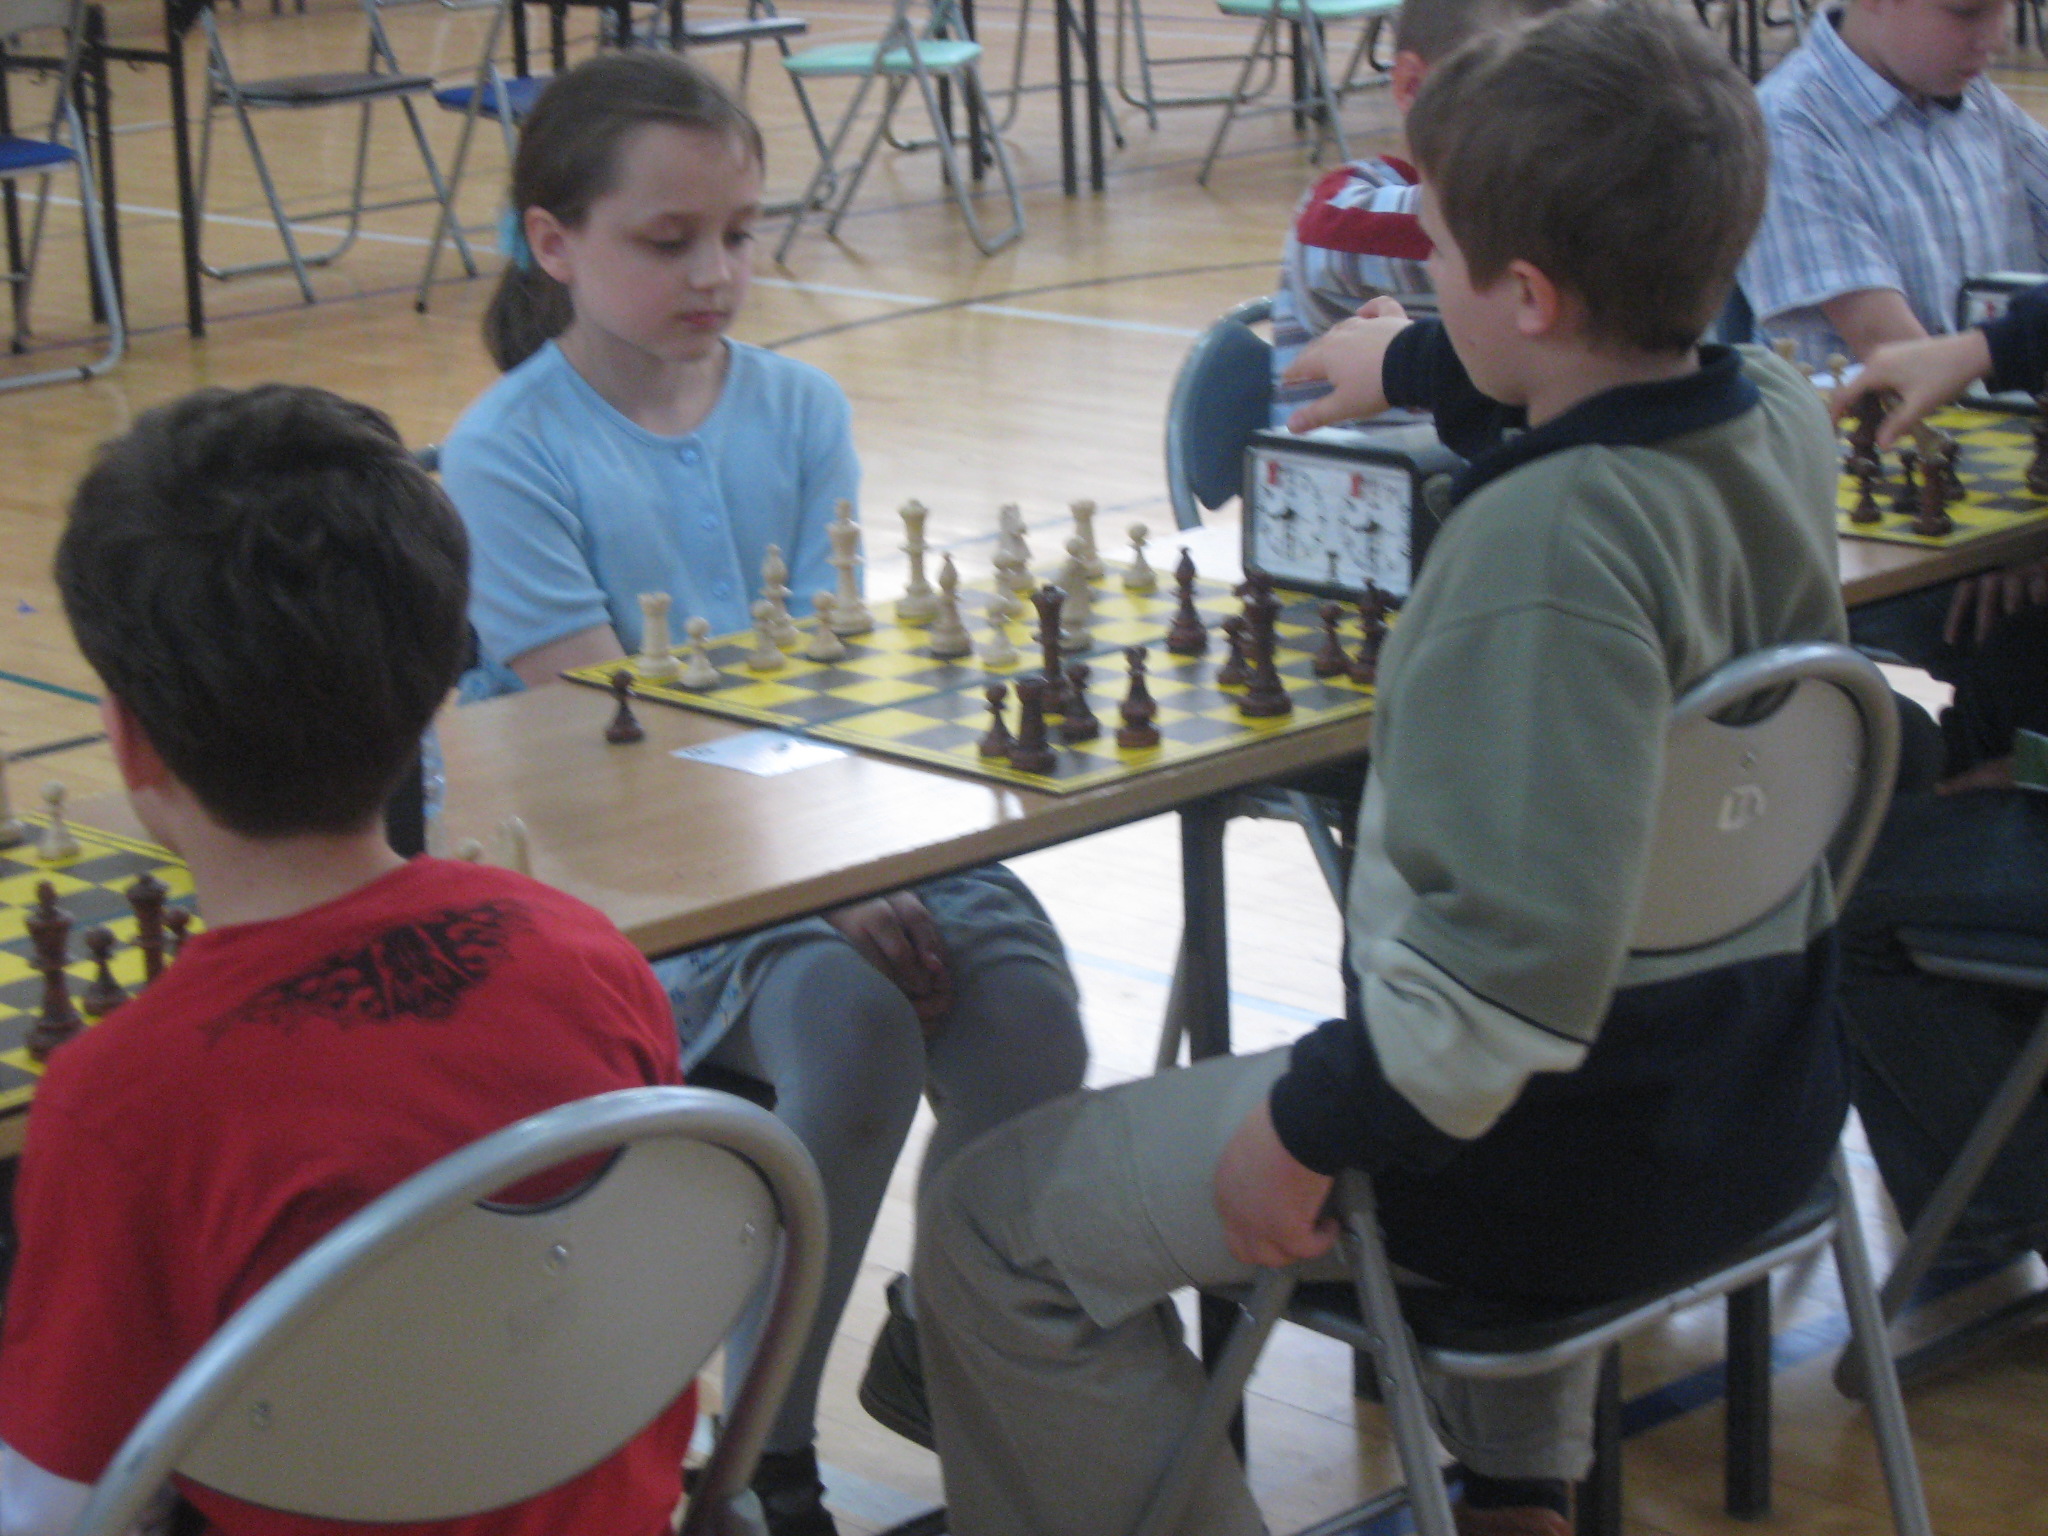 Partia szkocka. 1.e4 e5 2.Sf3 Sc6 3.d4 e:d4 4.S:d4 Gc5 5.Ge3 Hf6!. IV Szachowy Festiwal "Szachy u Piasta", Legnica, 30-31.05.2009.